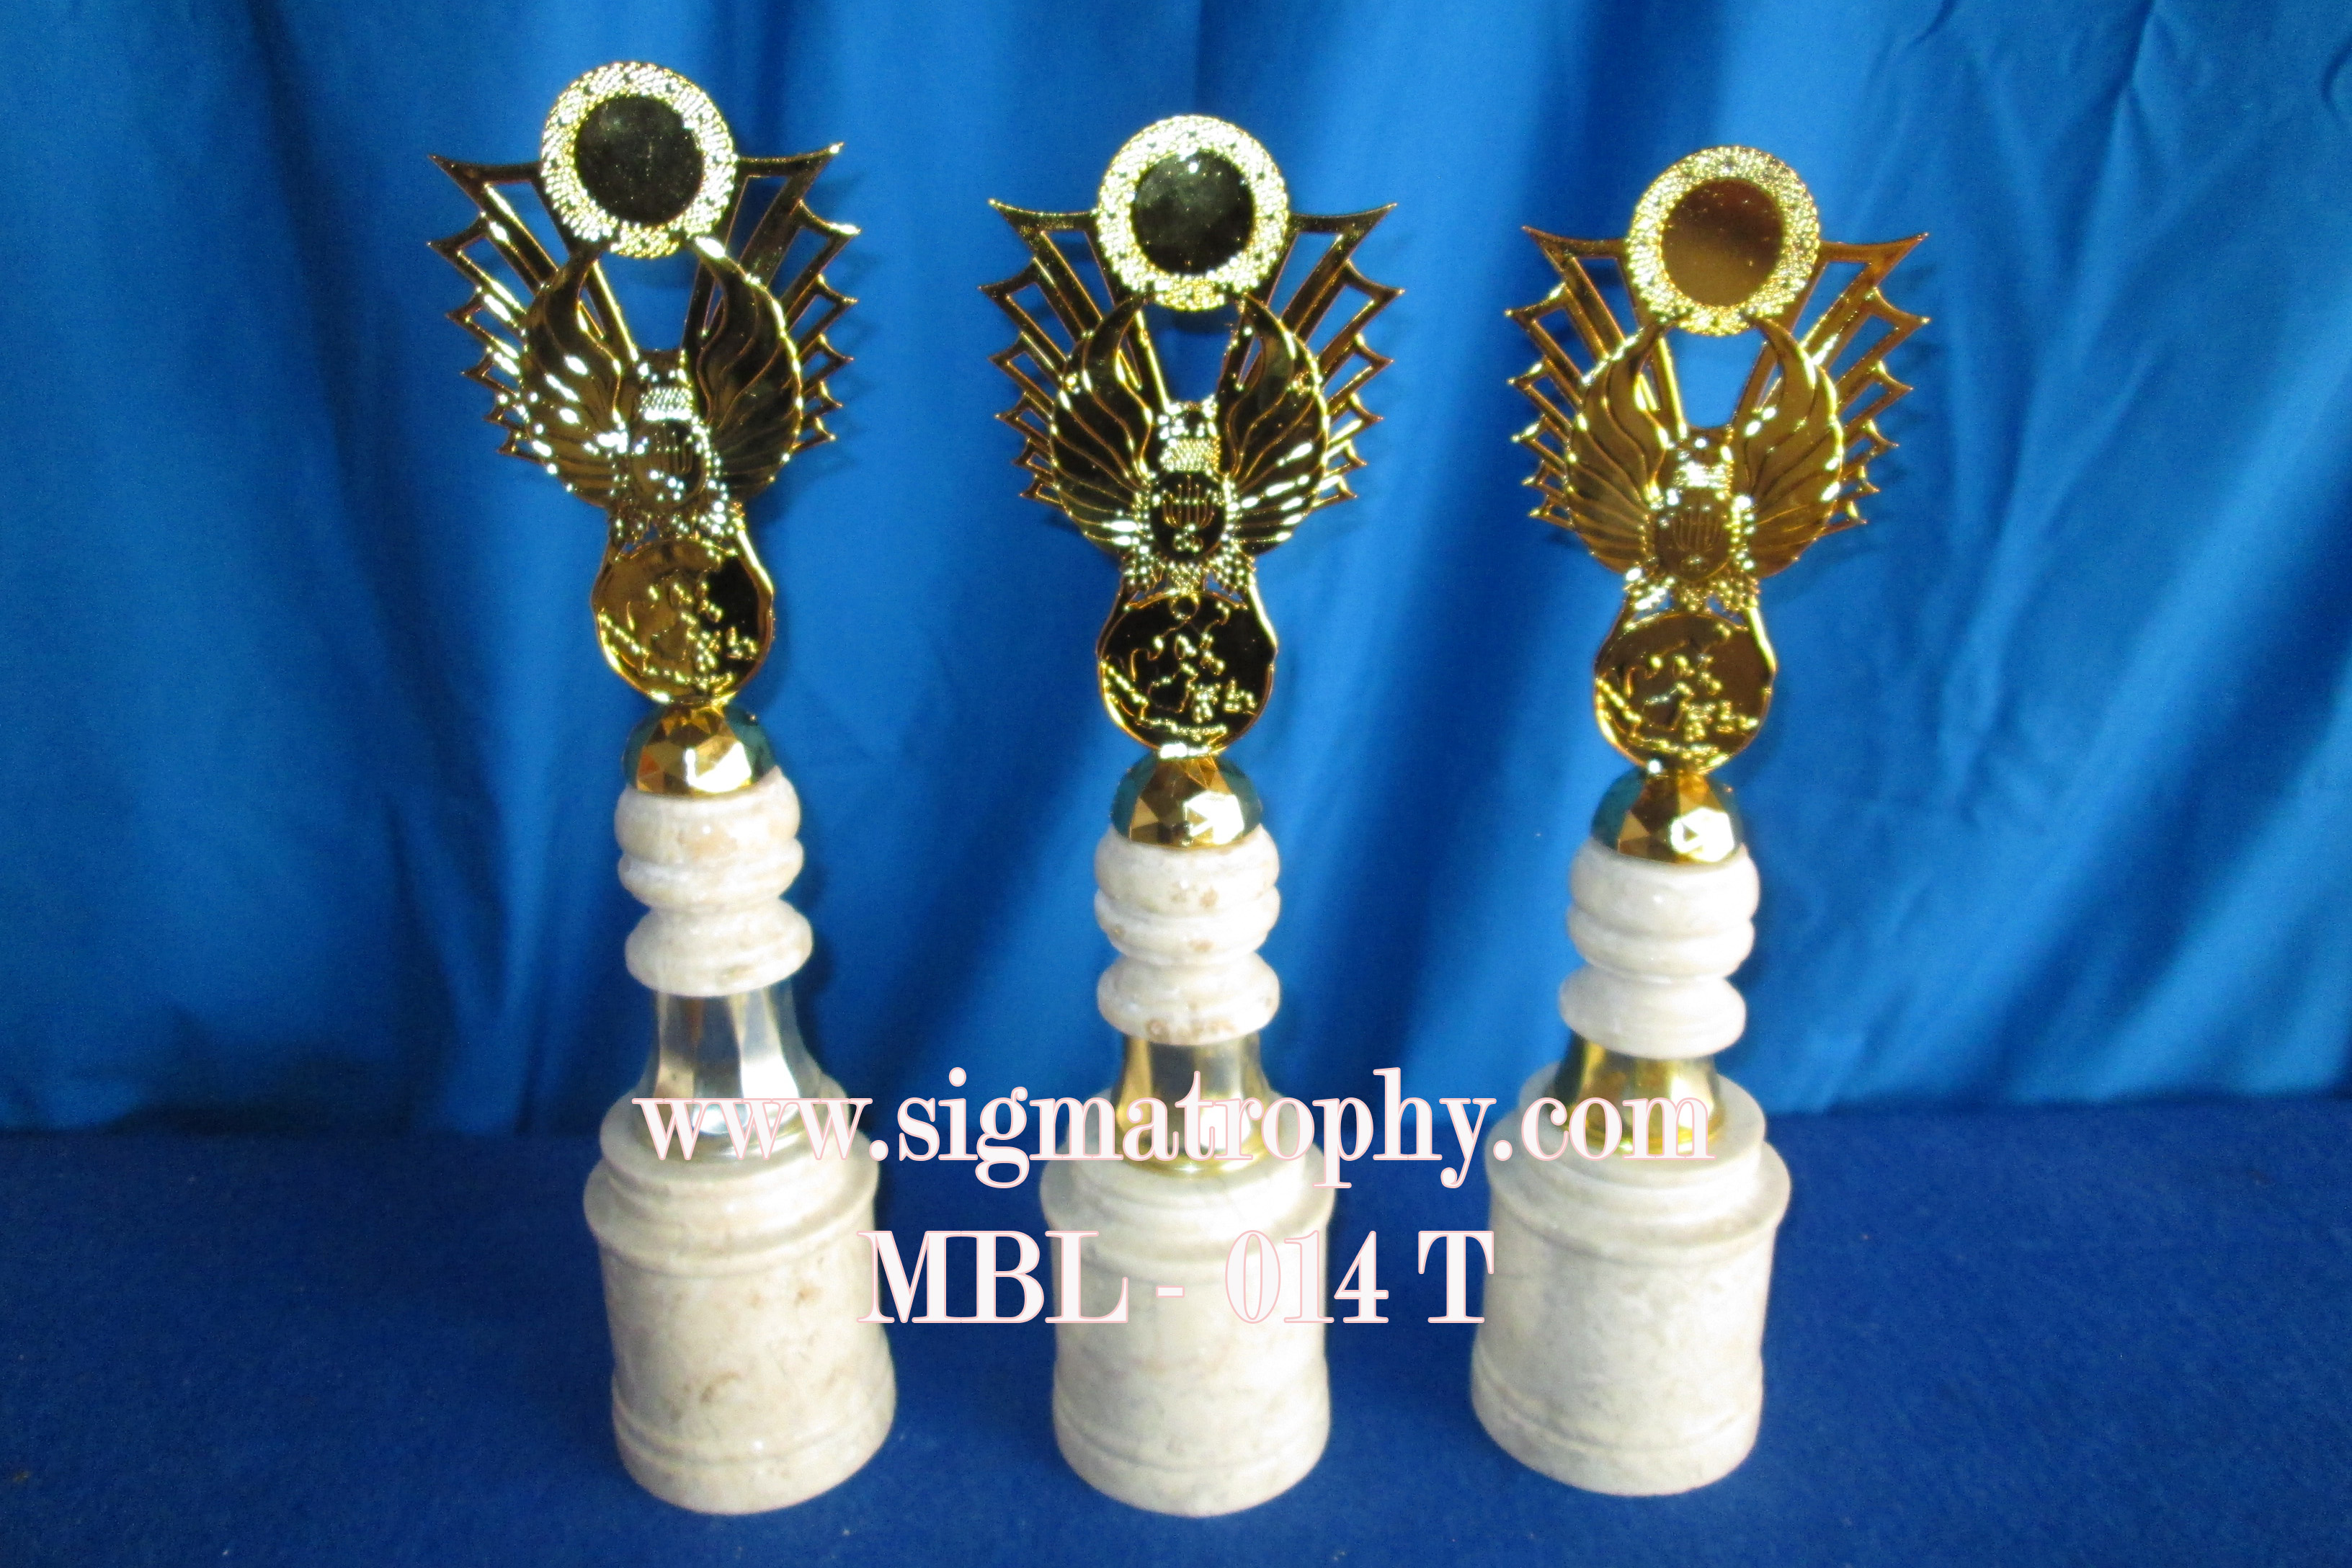 Sigma Trophy Jual Trophy Murah Pusat Trophy Marmer